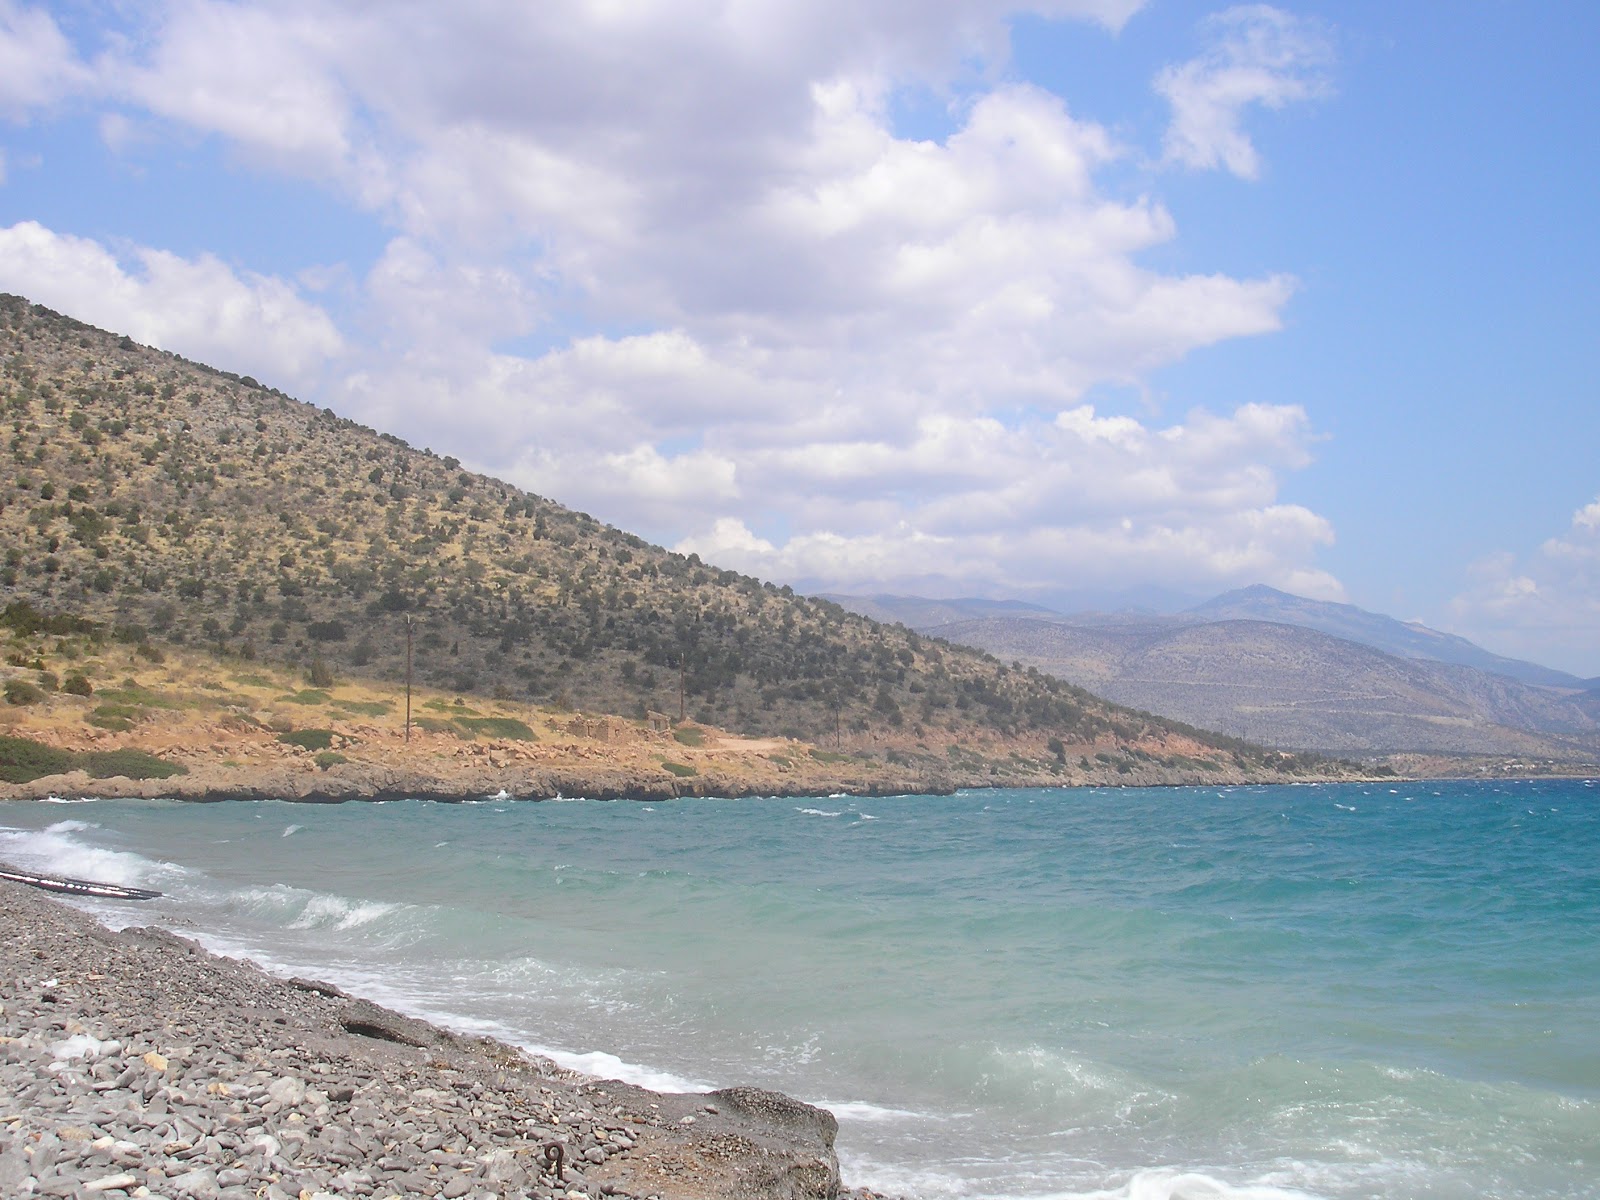 Fotografija Prosakos beach z turkizna čista voda površino